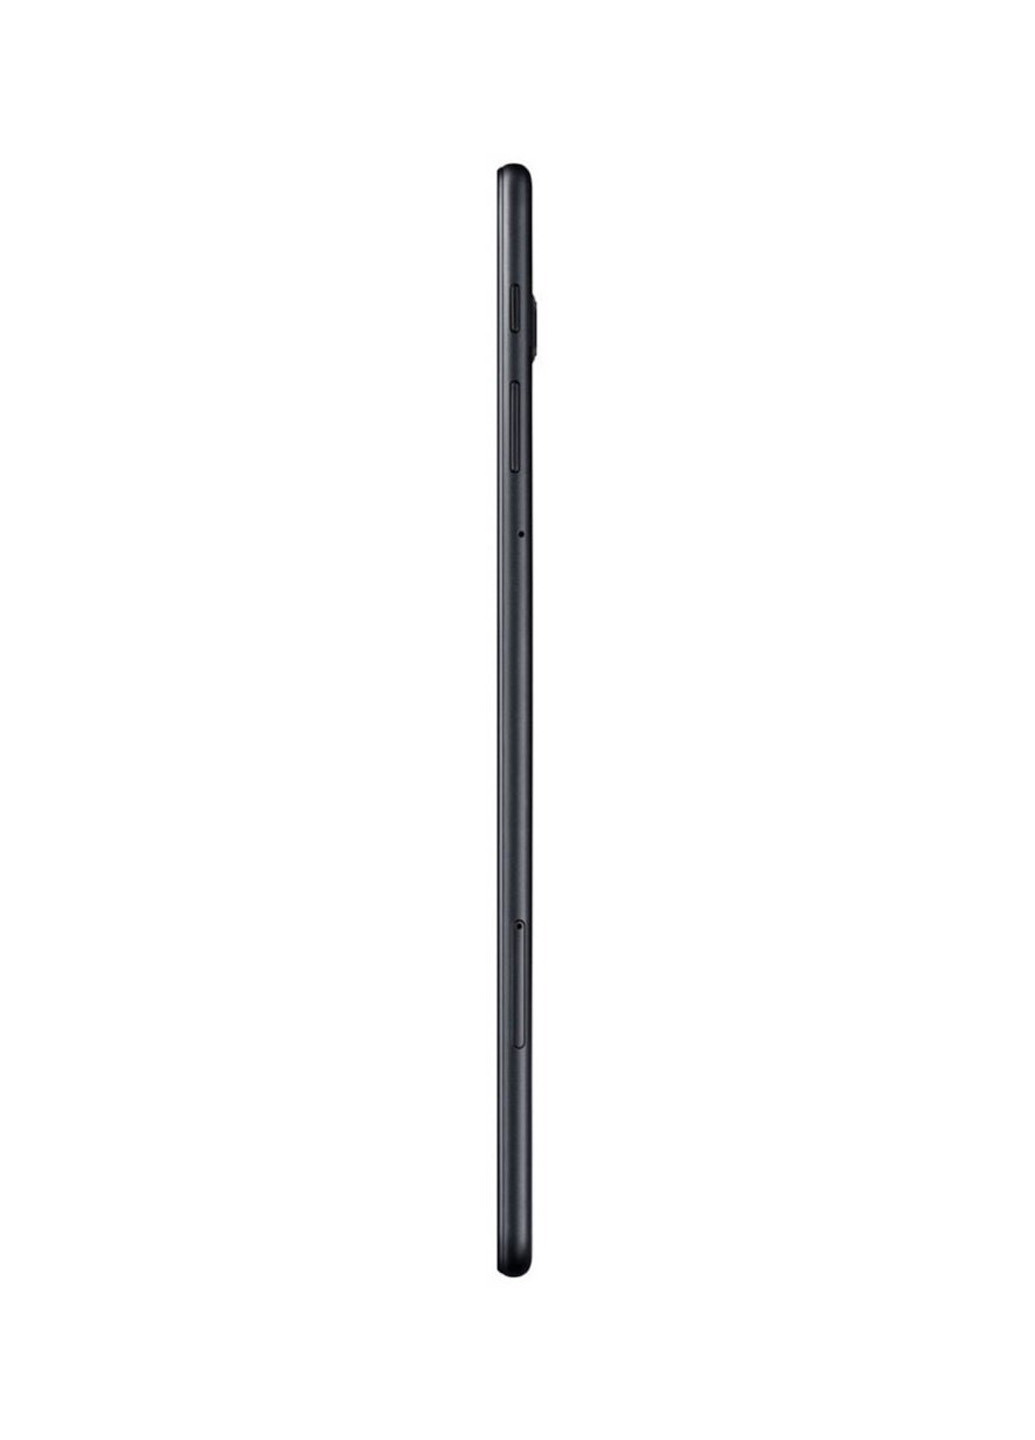 Планшет Samsung Galaxy Tab A 10.5 Wi-Fi 32GB Black (SM-T590NZKASEK) чёрный